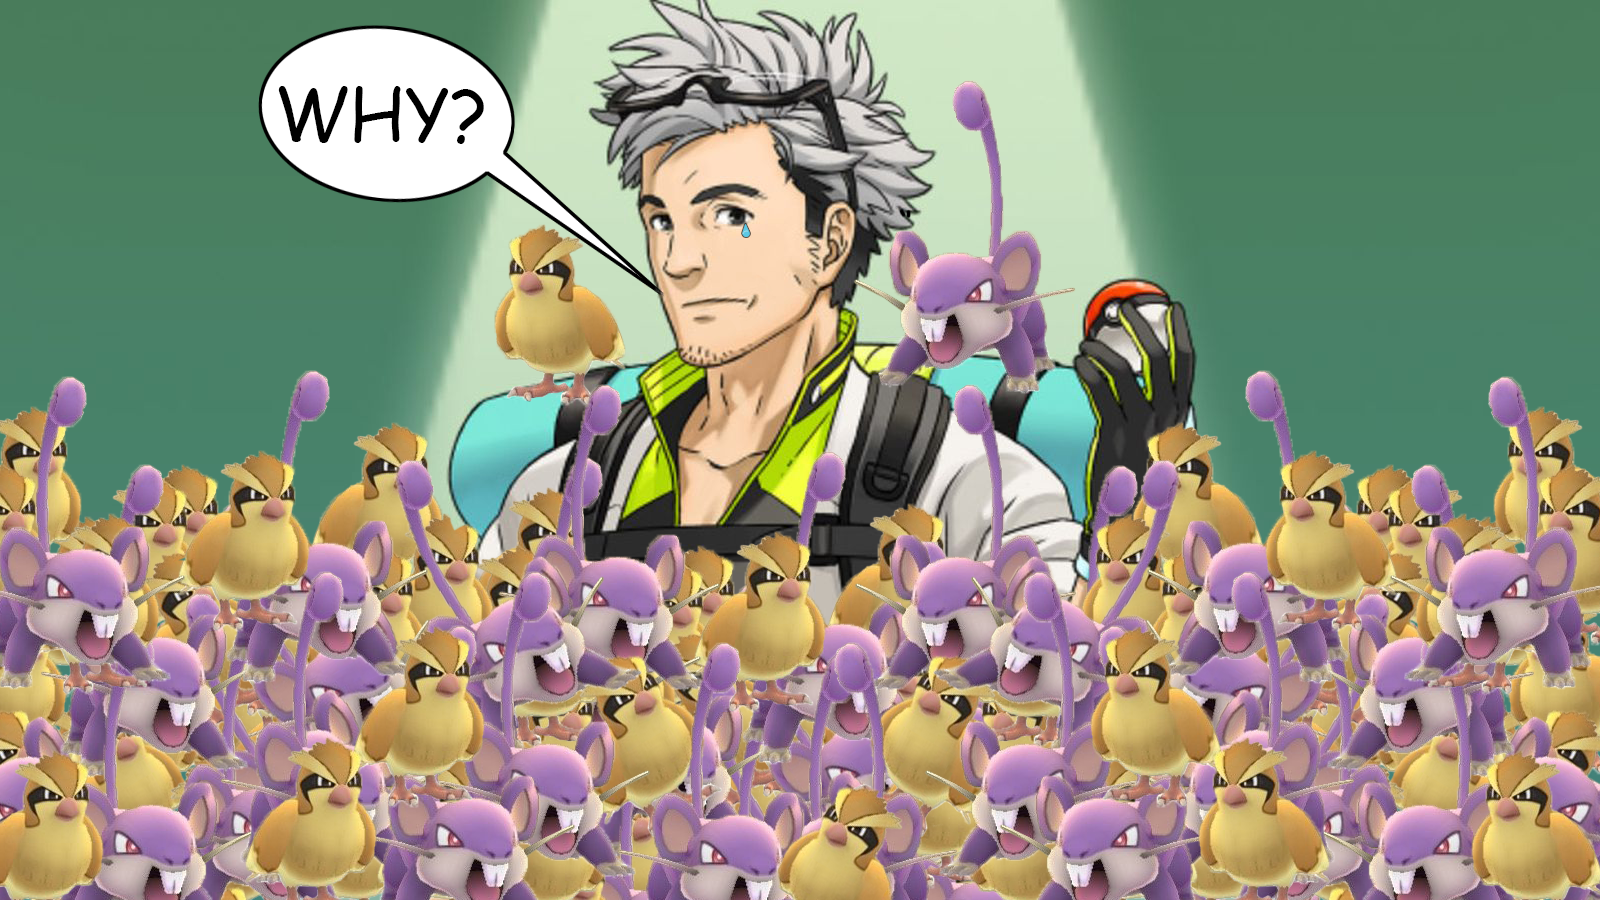 professor willow pokemon go meme - Why?